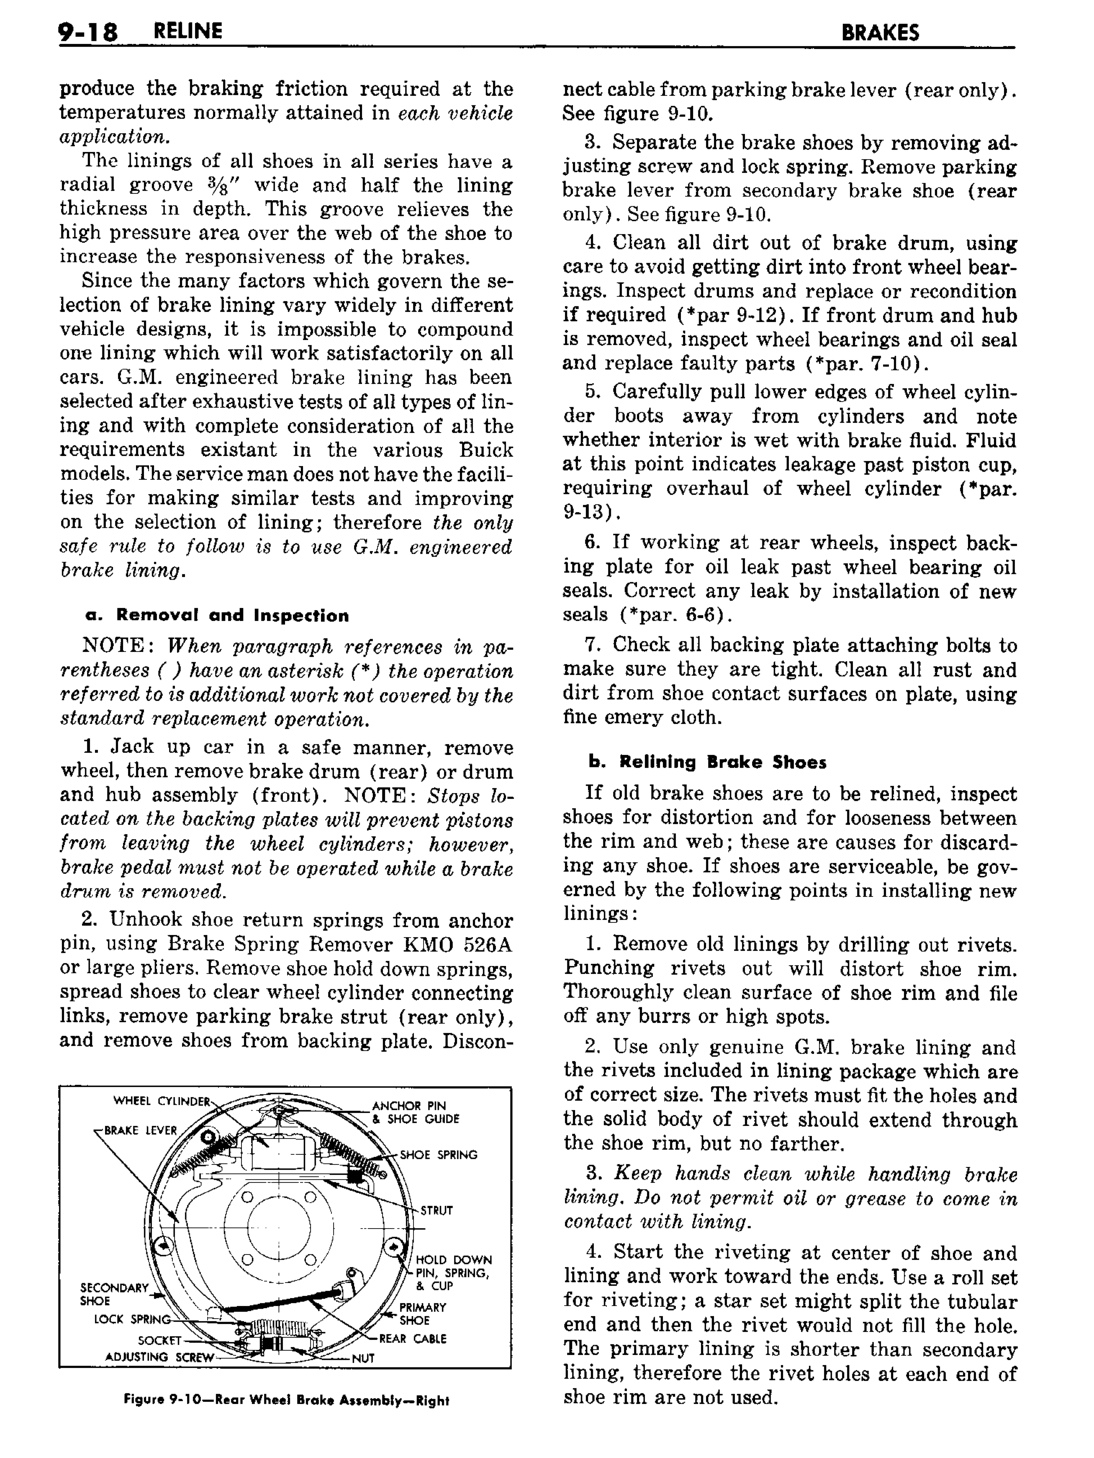 n_10 1960 Buick Shop Manual - Brakes-018-018.jpg